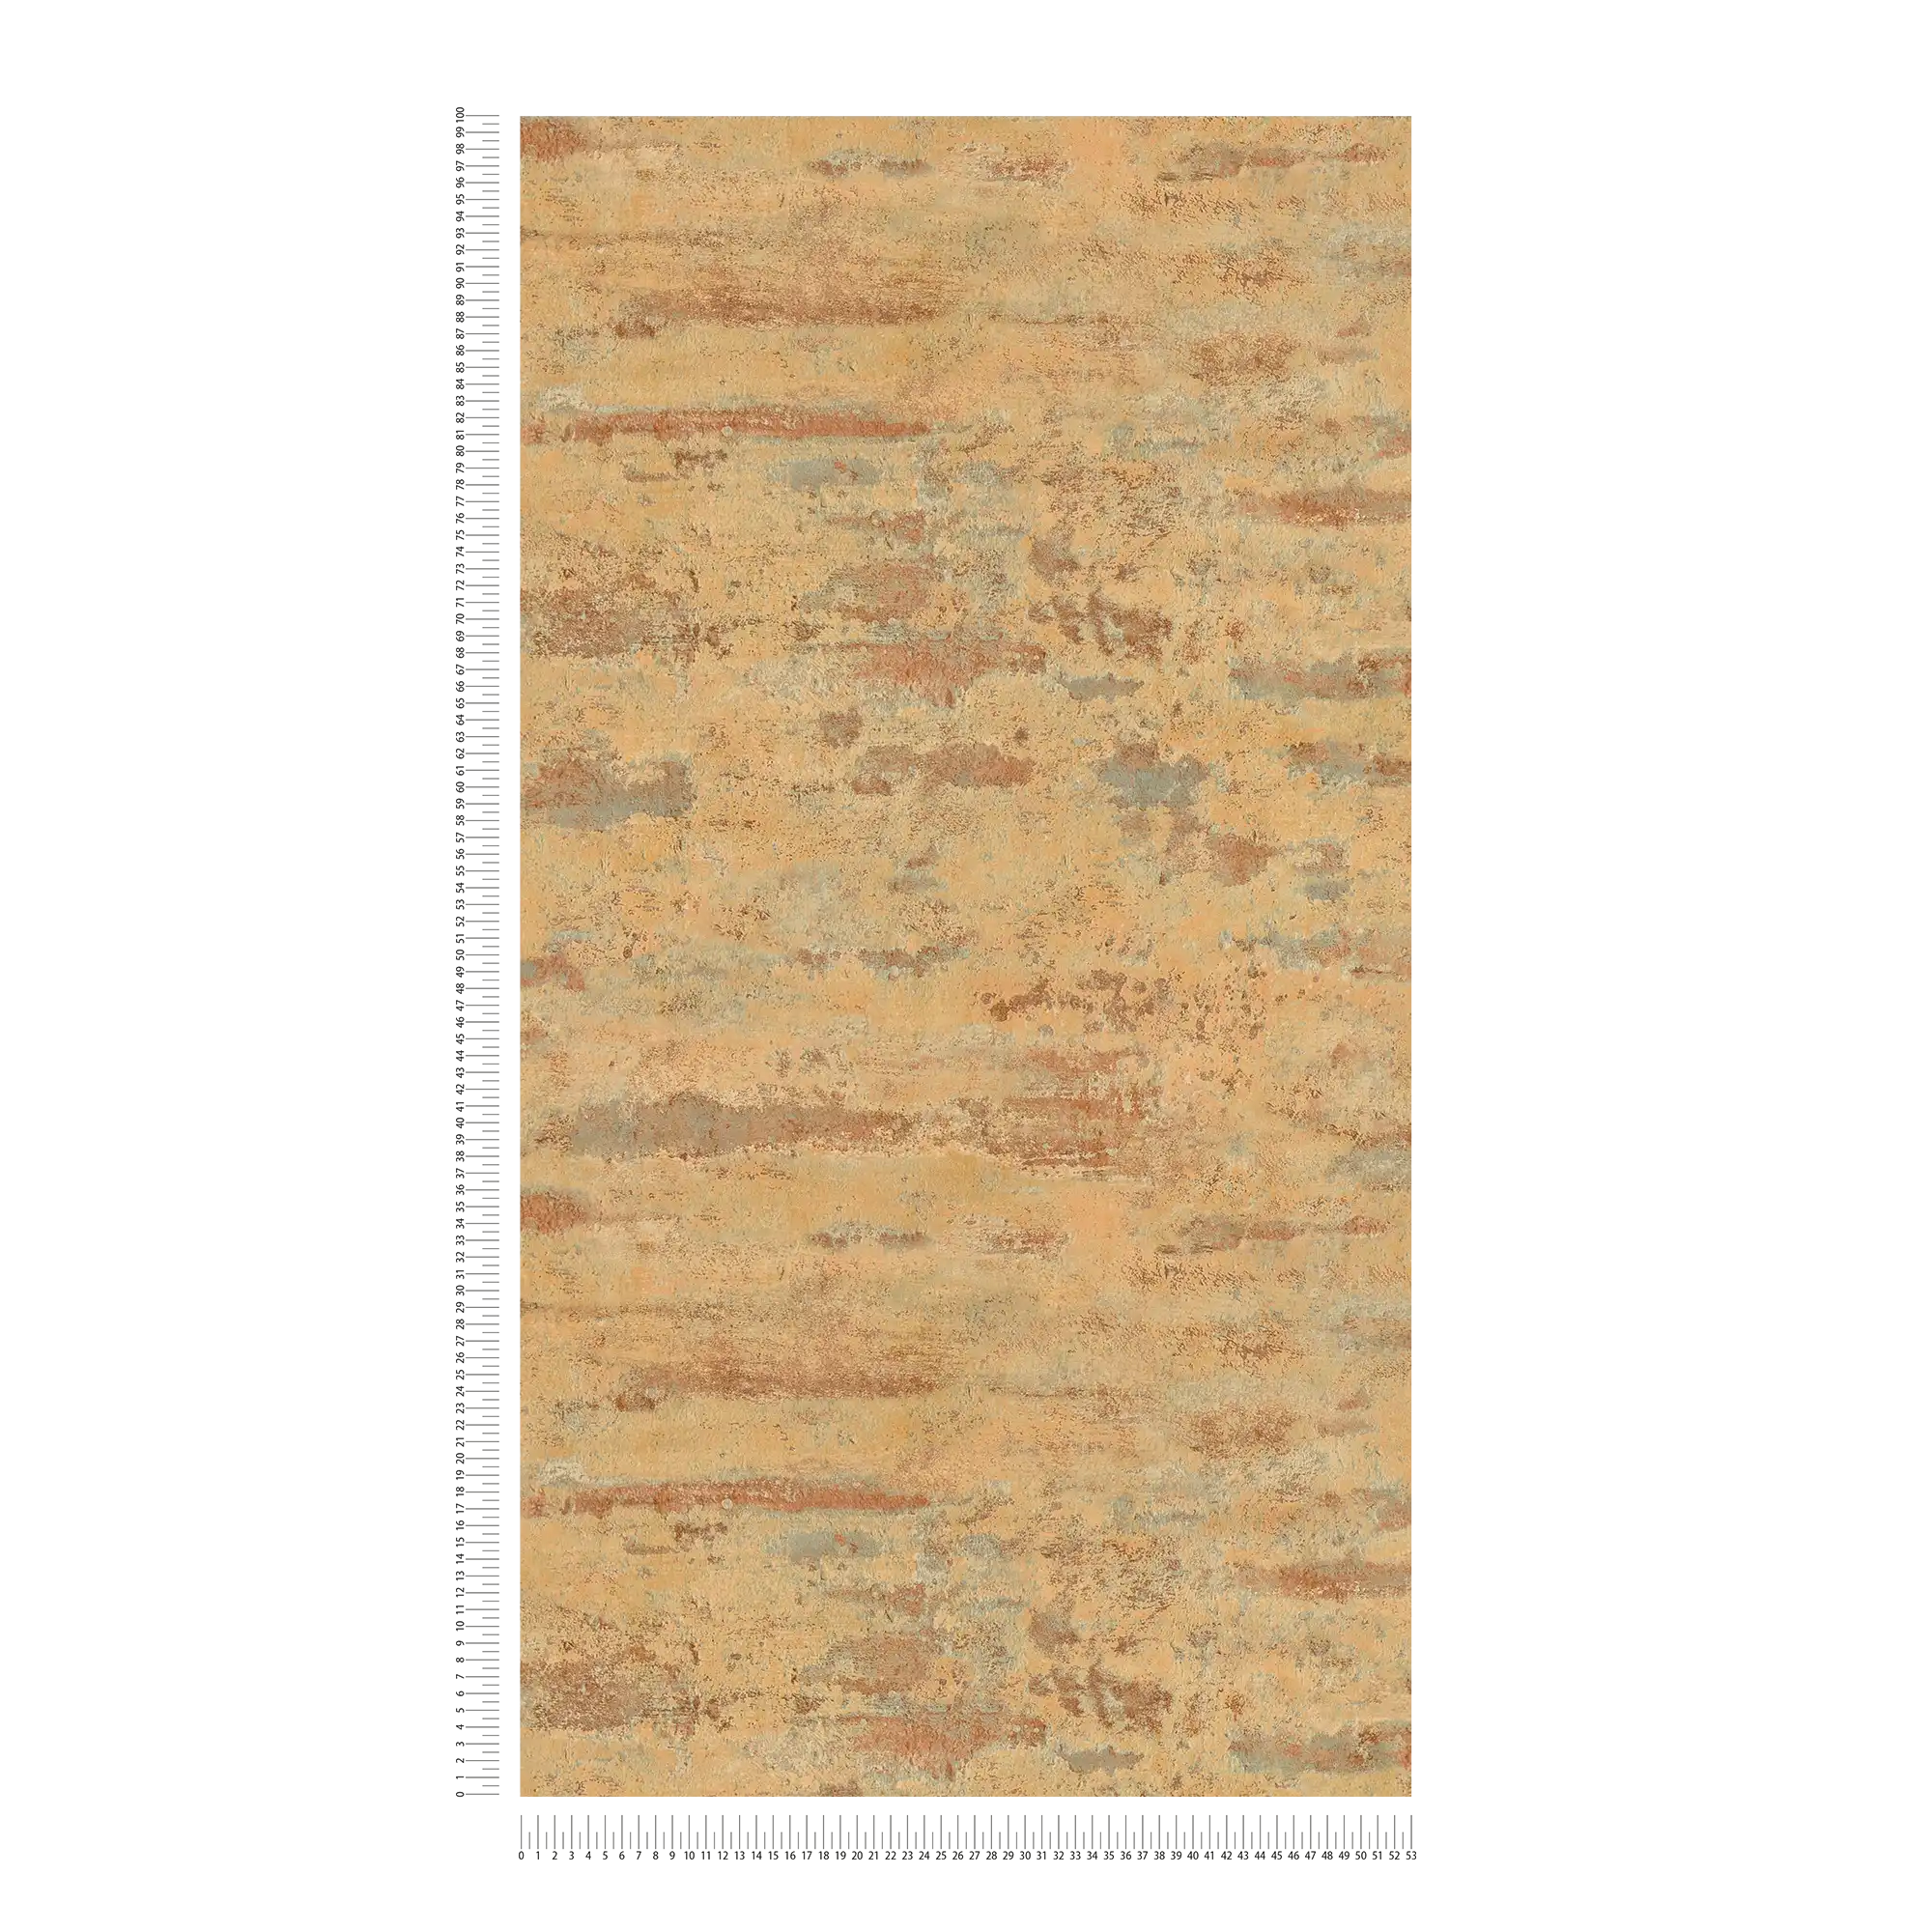             Non-woven wallpaper rust look & used look - orange, grey, blue
        